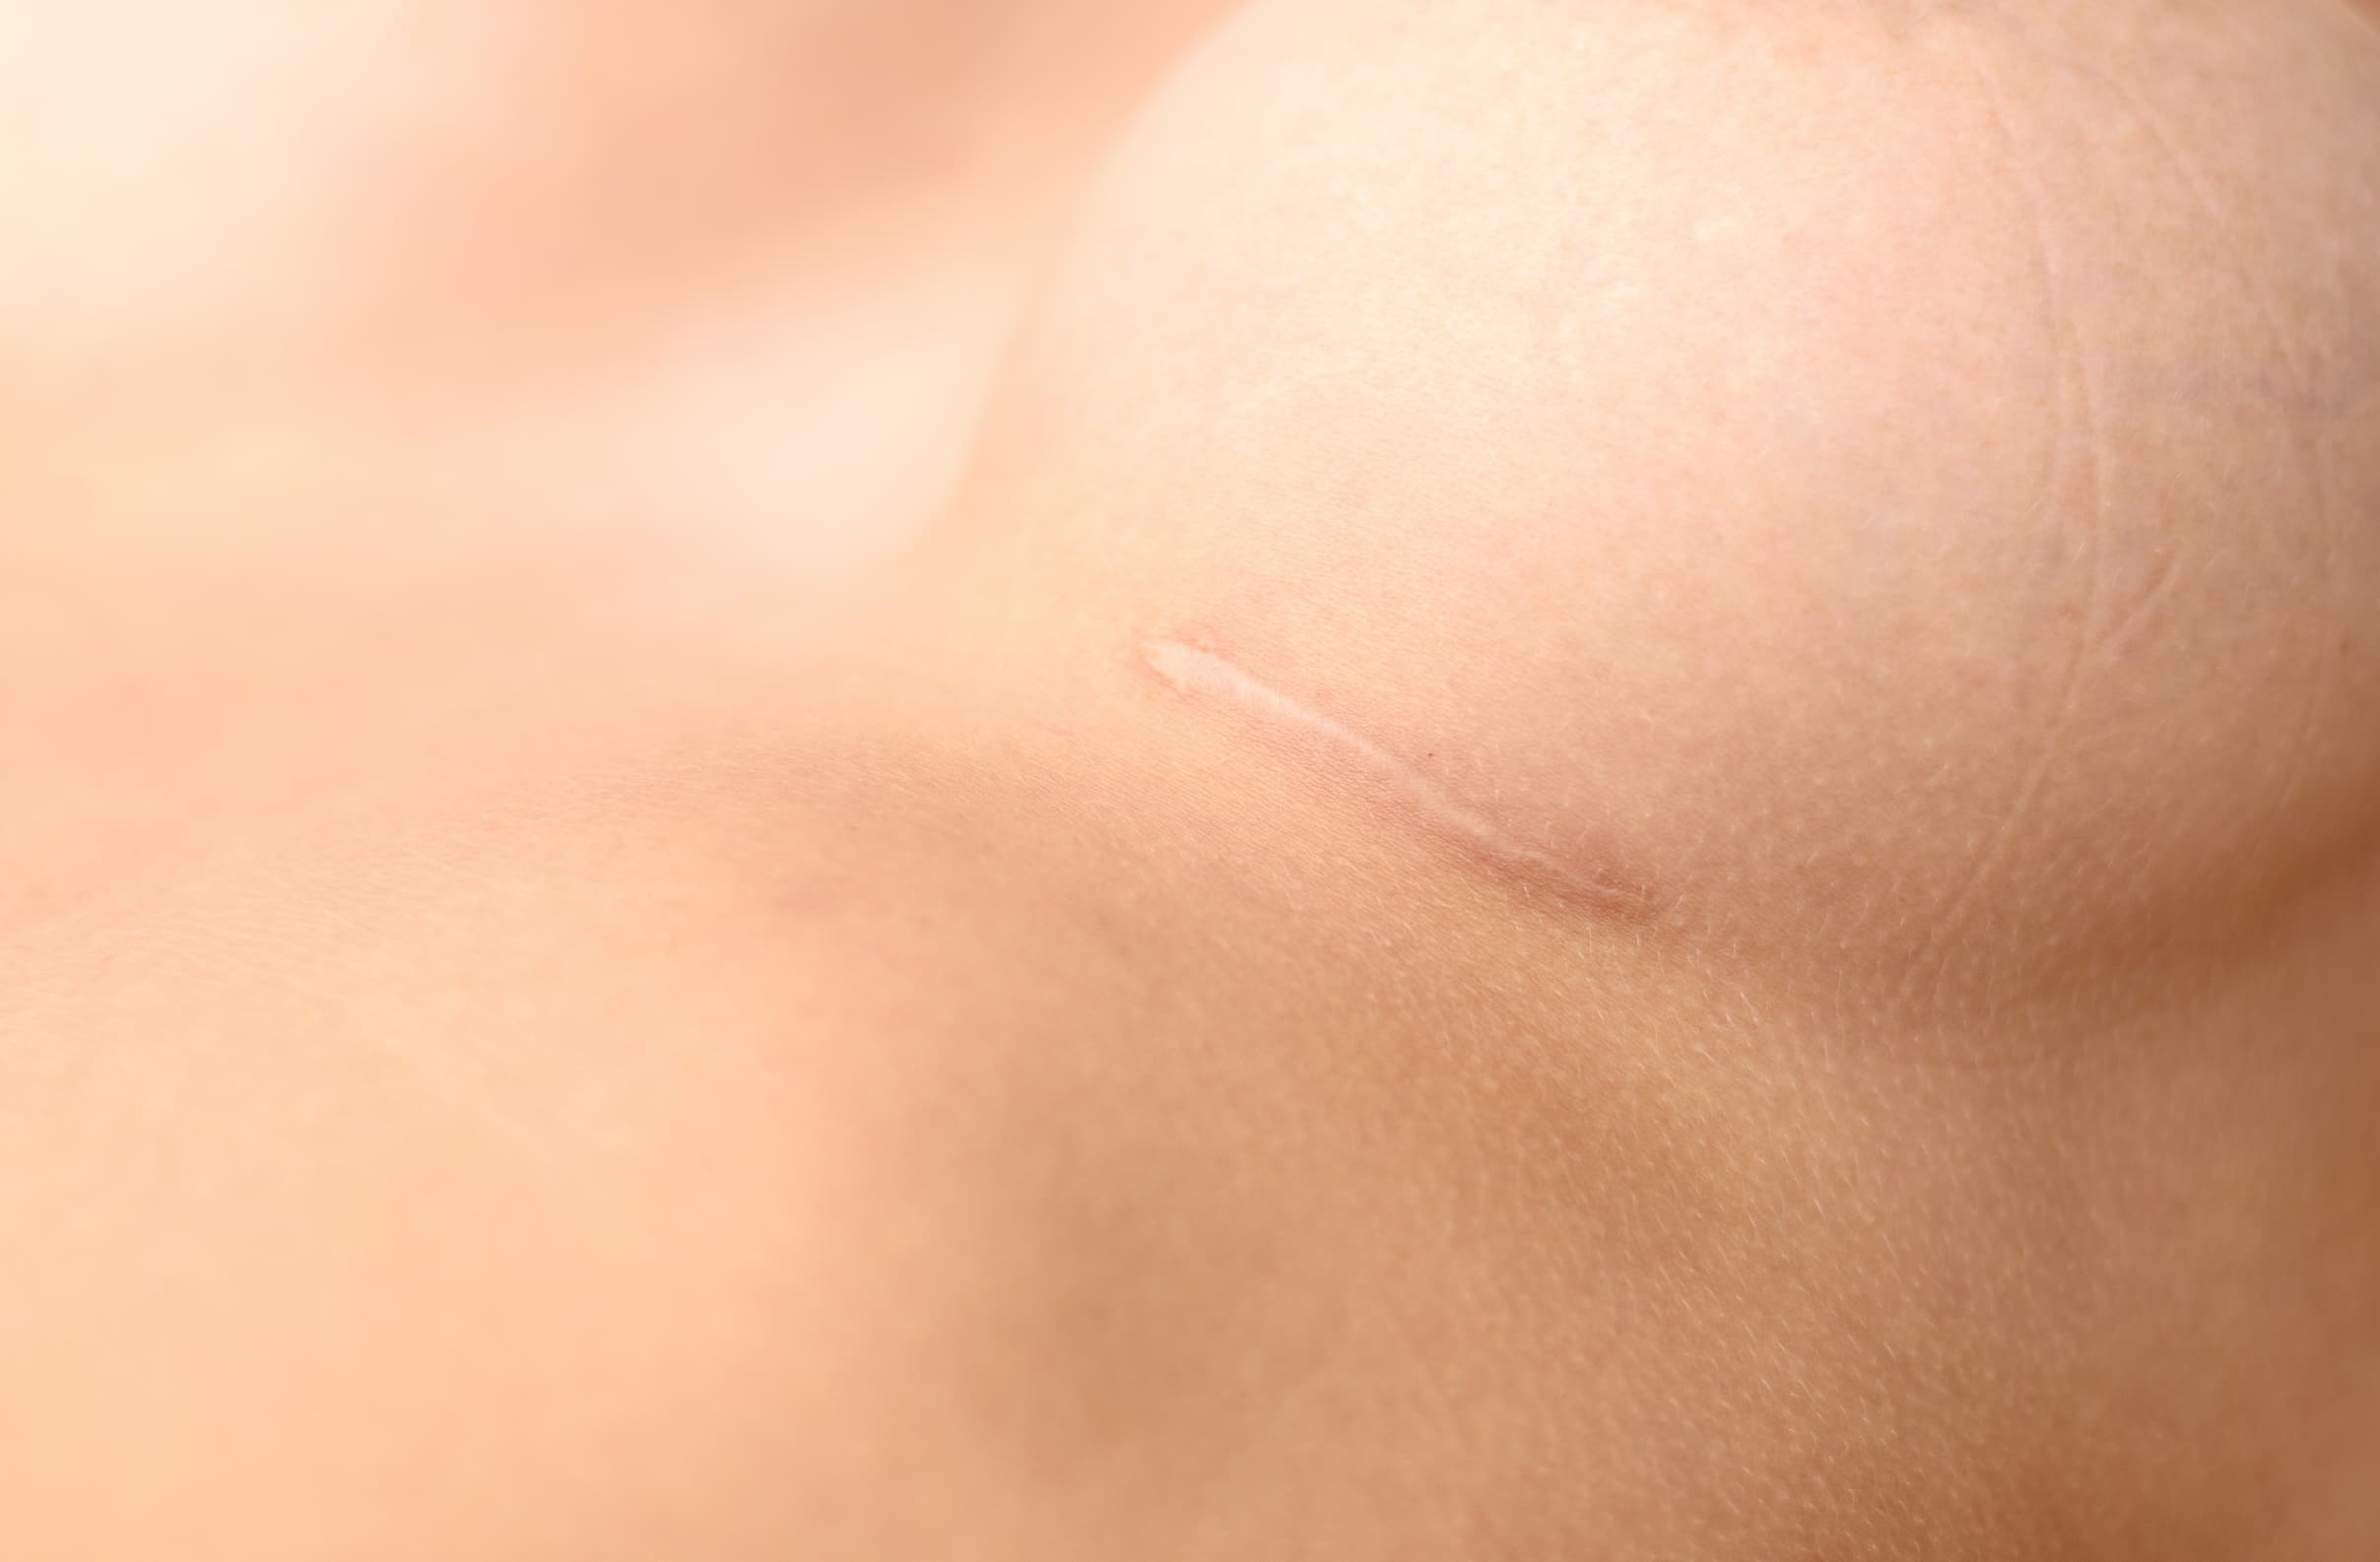 A scar under a woman's breast.